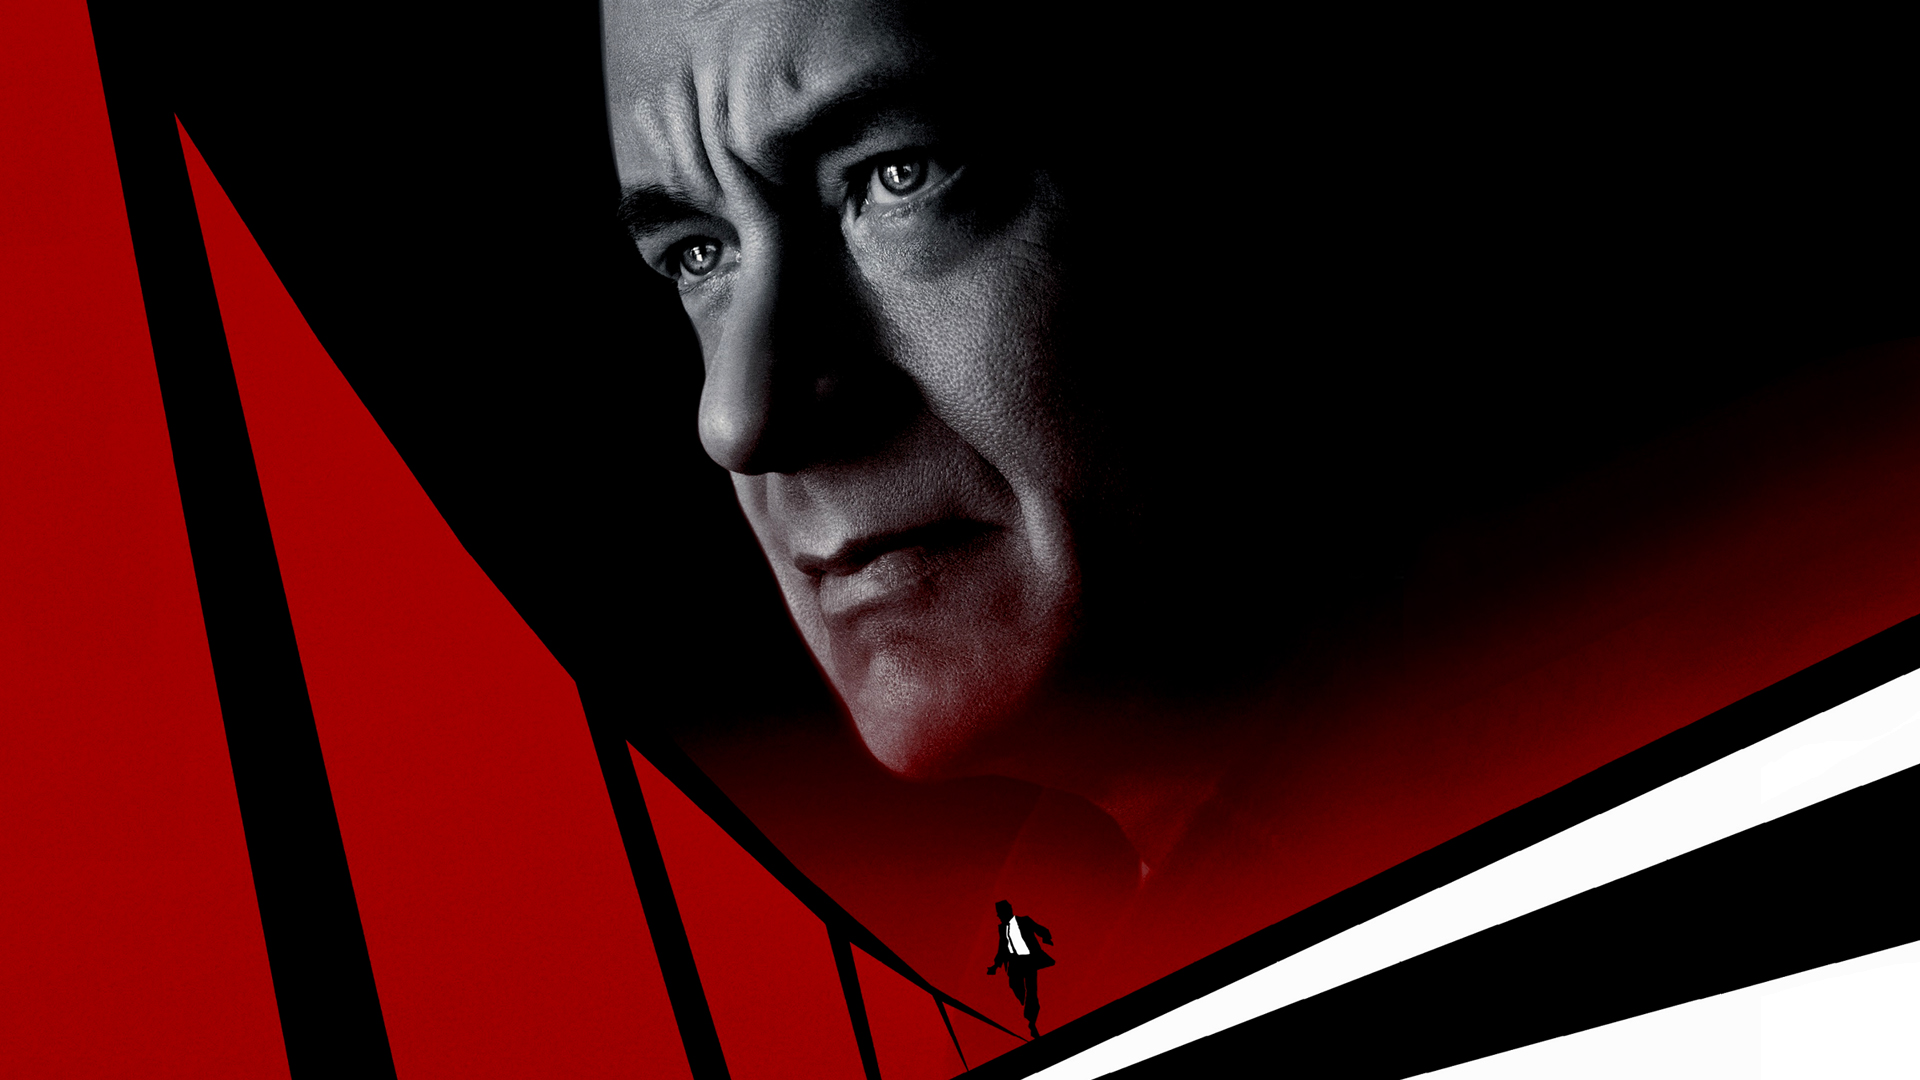 Wallpaper Tom Hanks in Bridge of Spies movie, poster